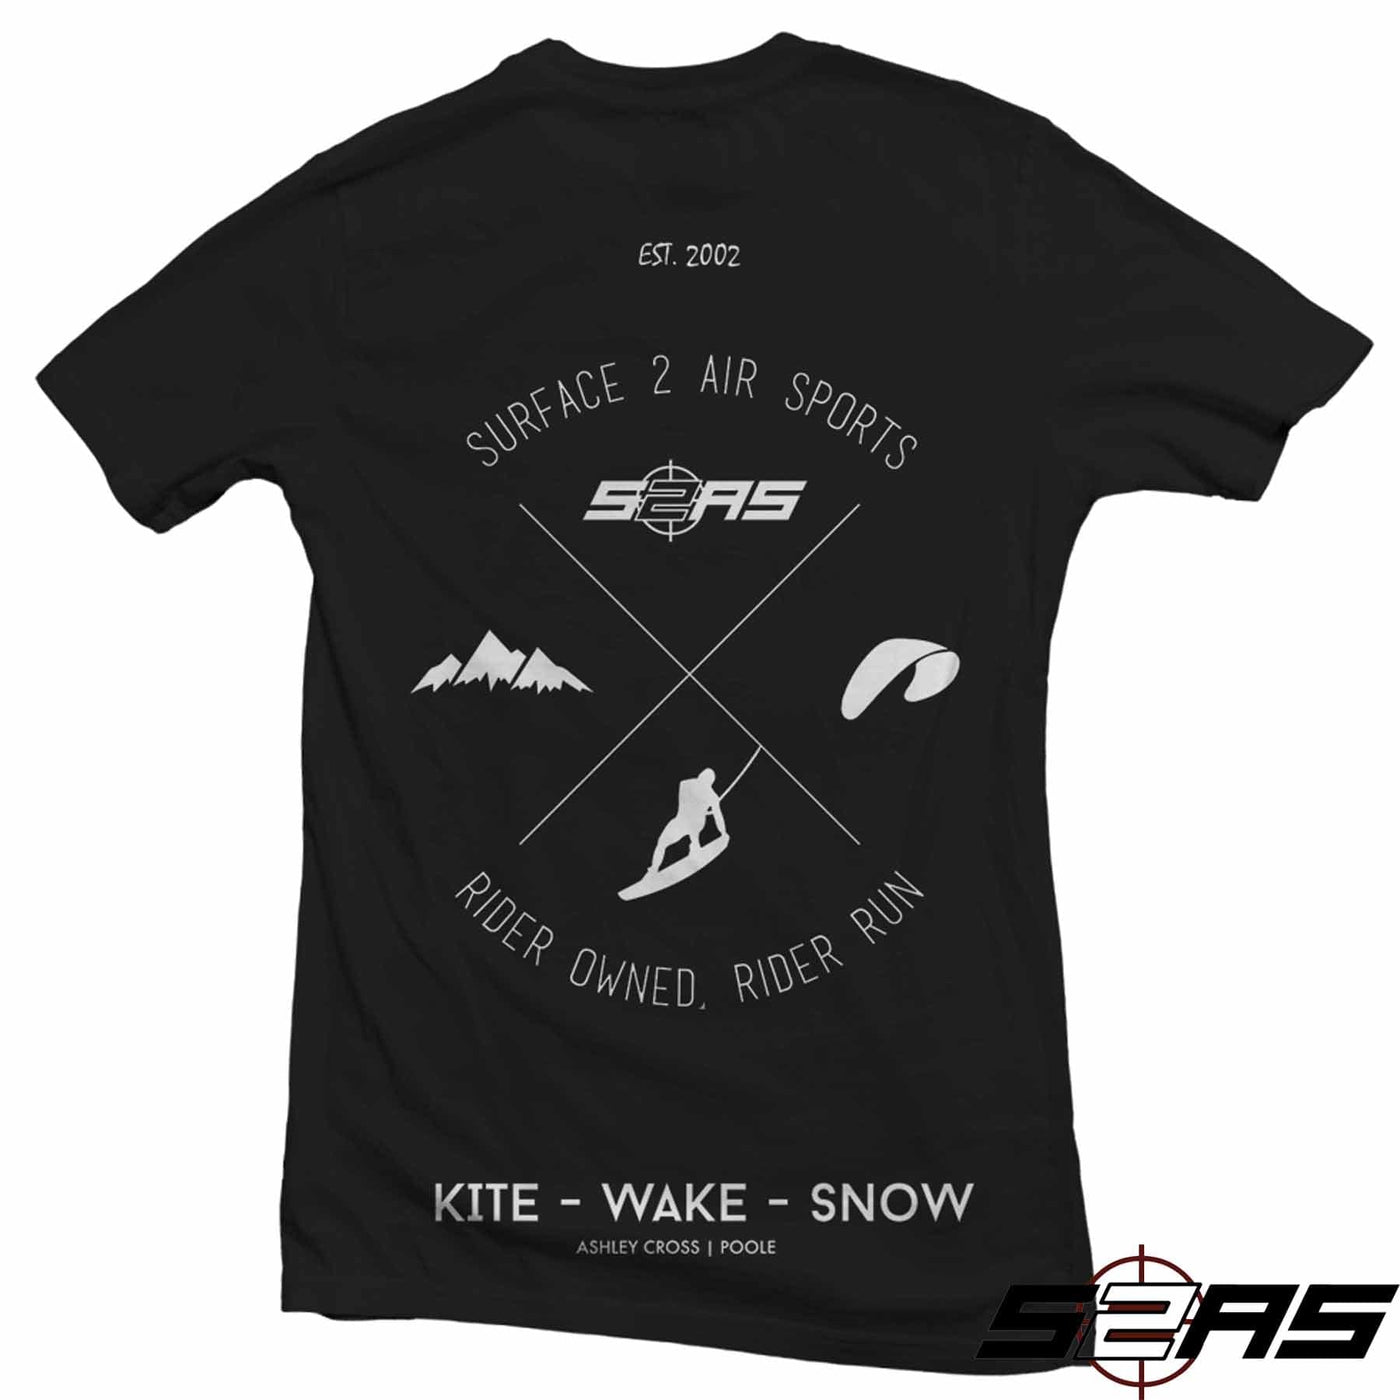 Surface2Air Sports 'S2AS' T-Shirt (Black) S2AS